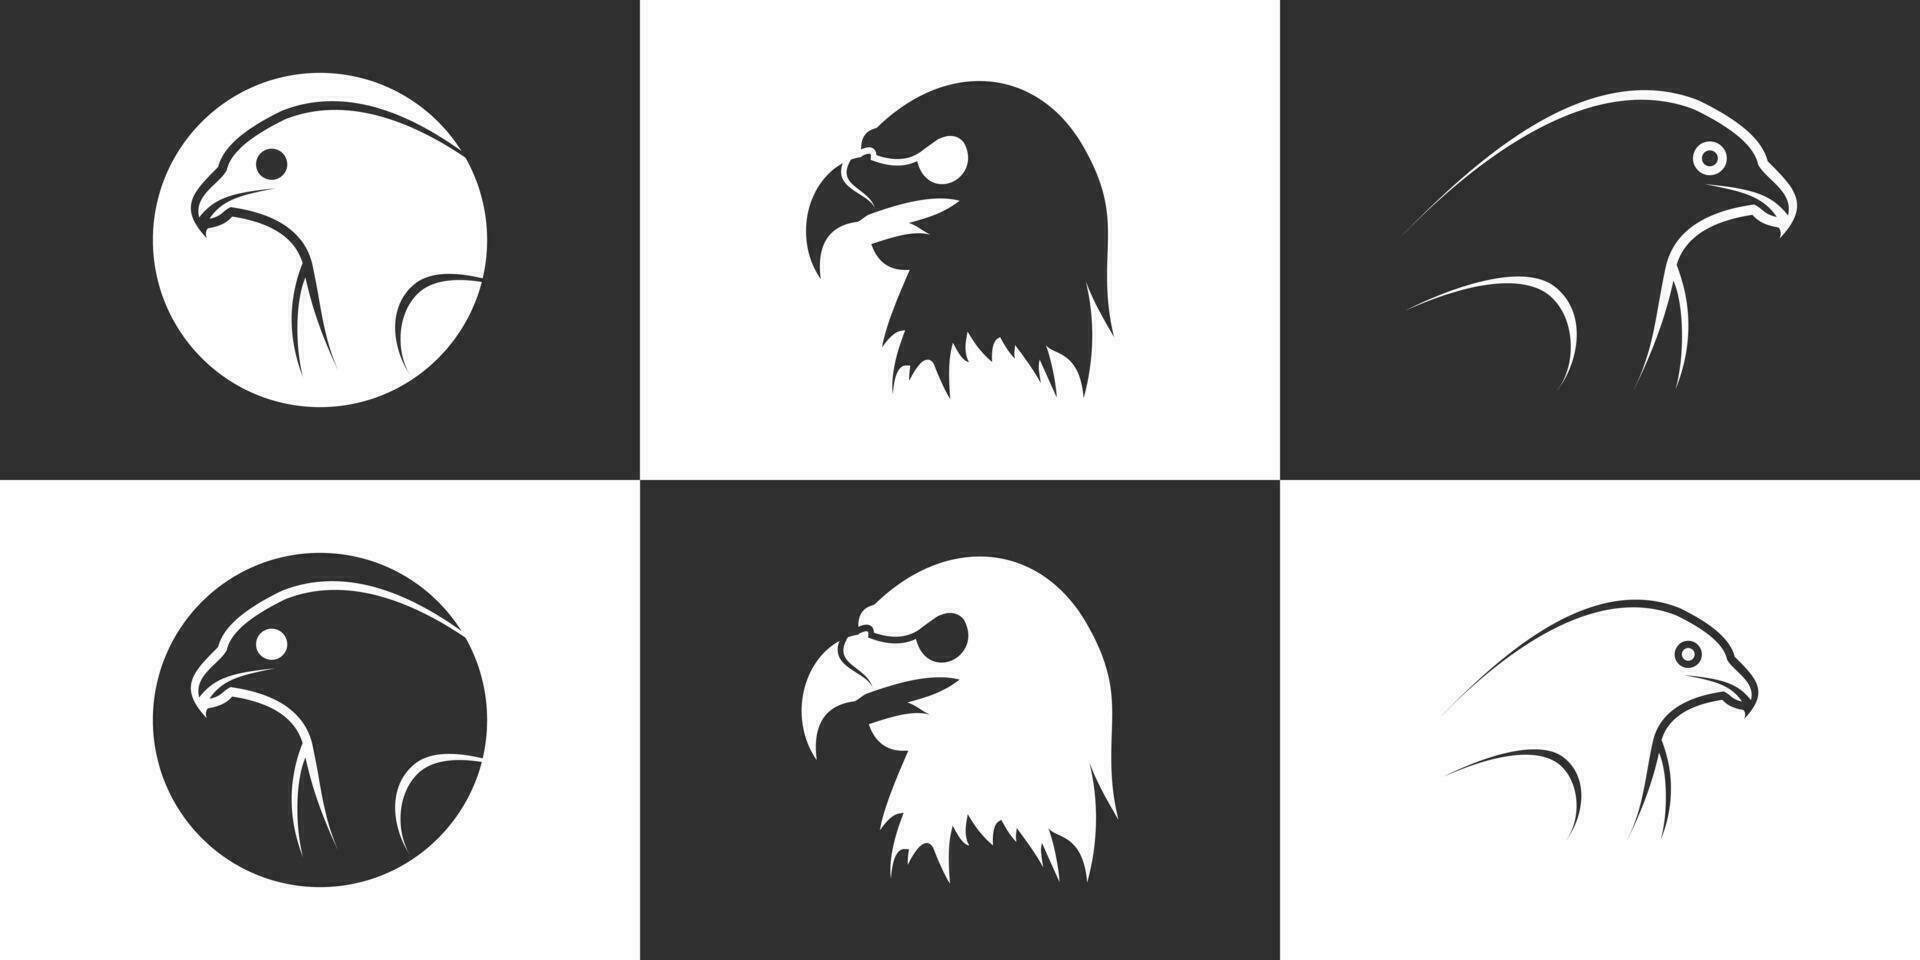 Set head eagle logo design with unique concept Premium Vector